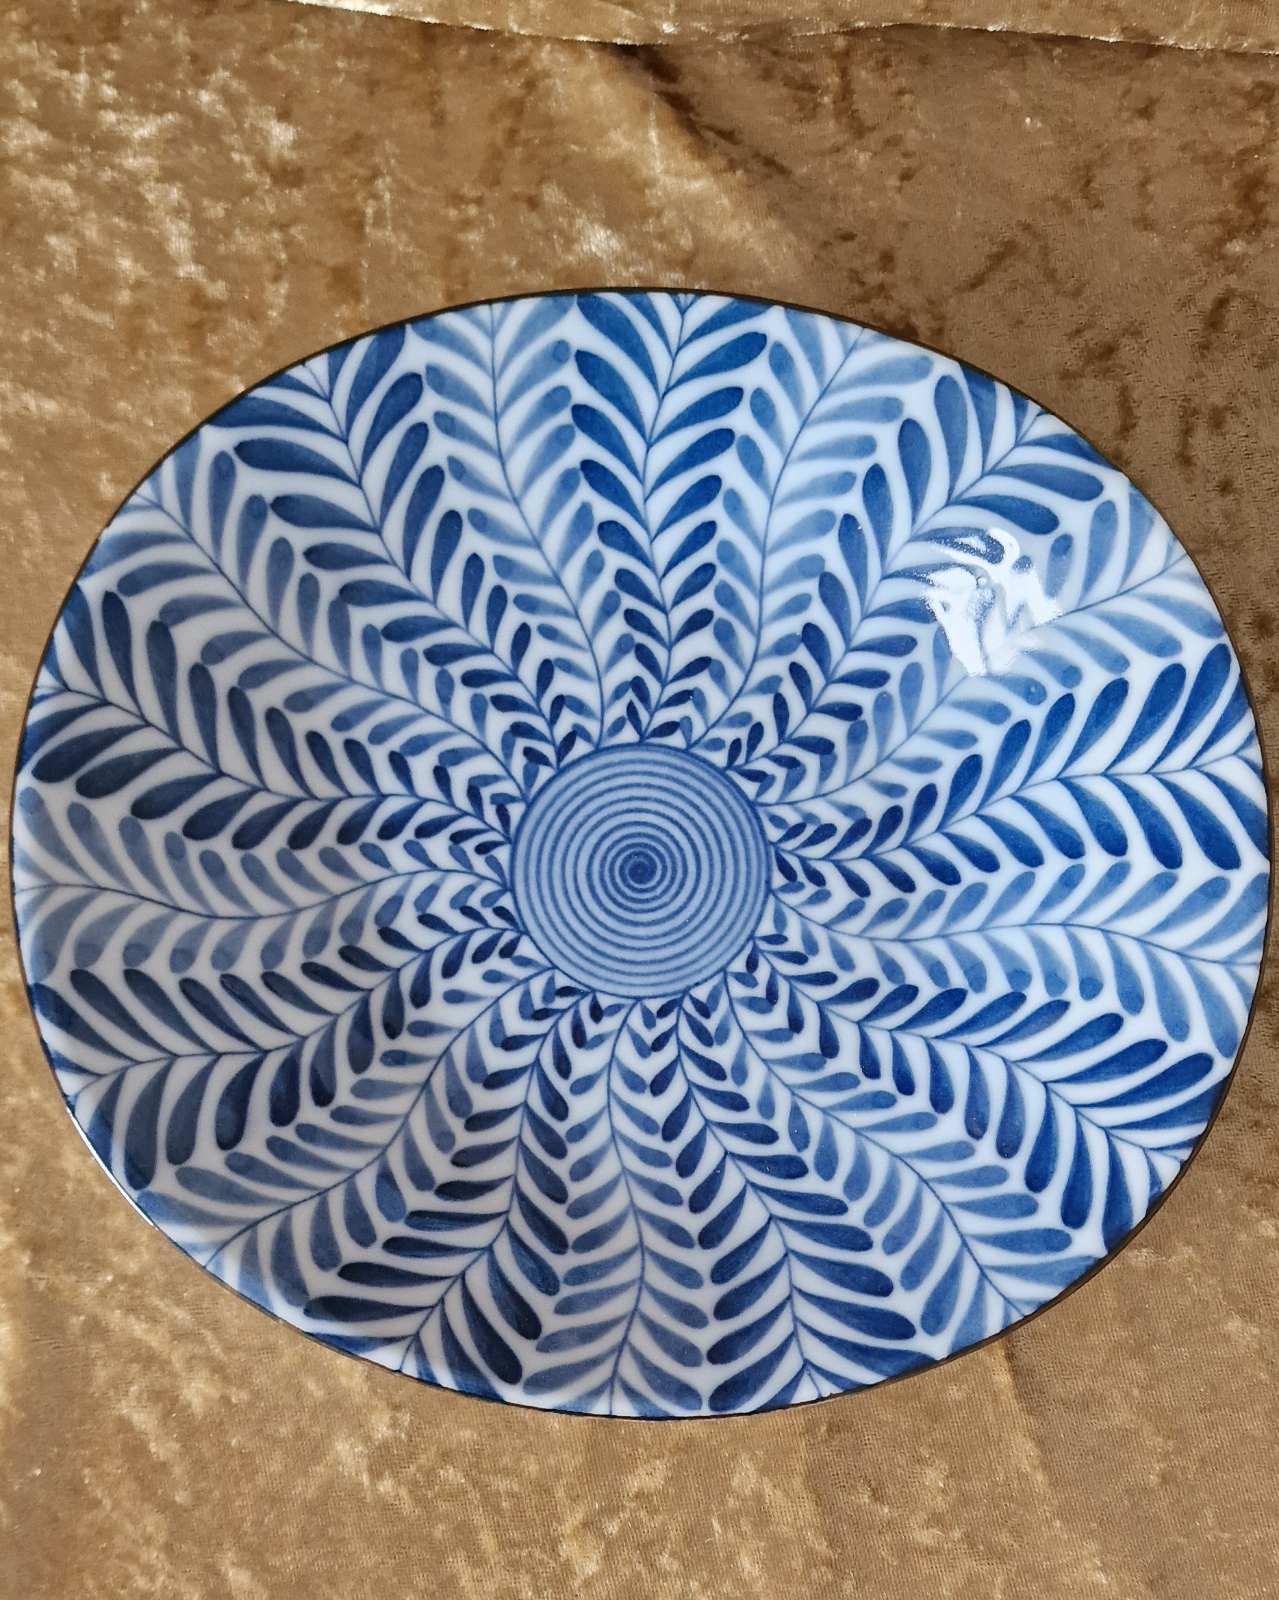 Three blue and white floral plates, Saikai Pottery Traditional Japanese Ai-e Indigo Patterns Porcelain Plates 31302 from Japan.